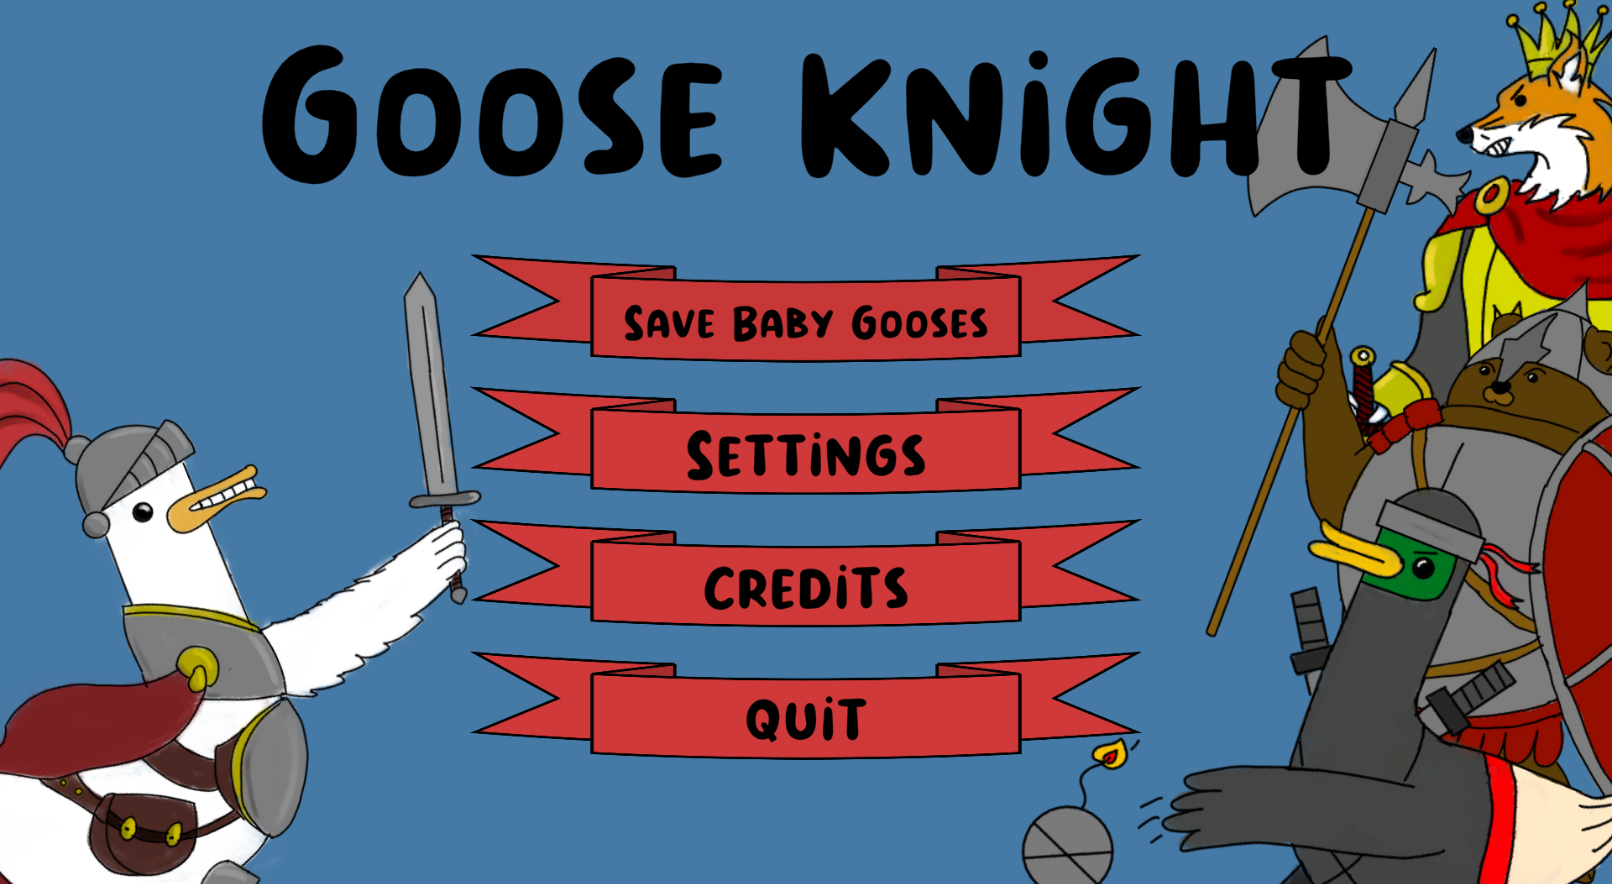 Goose Knight